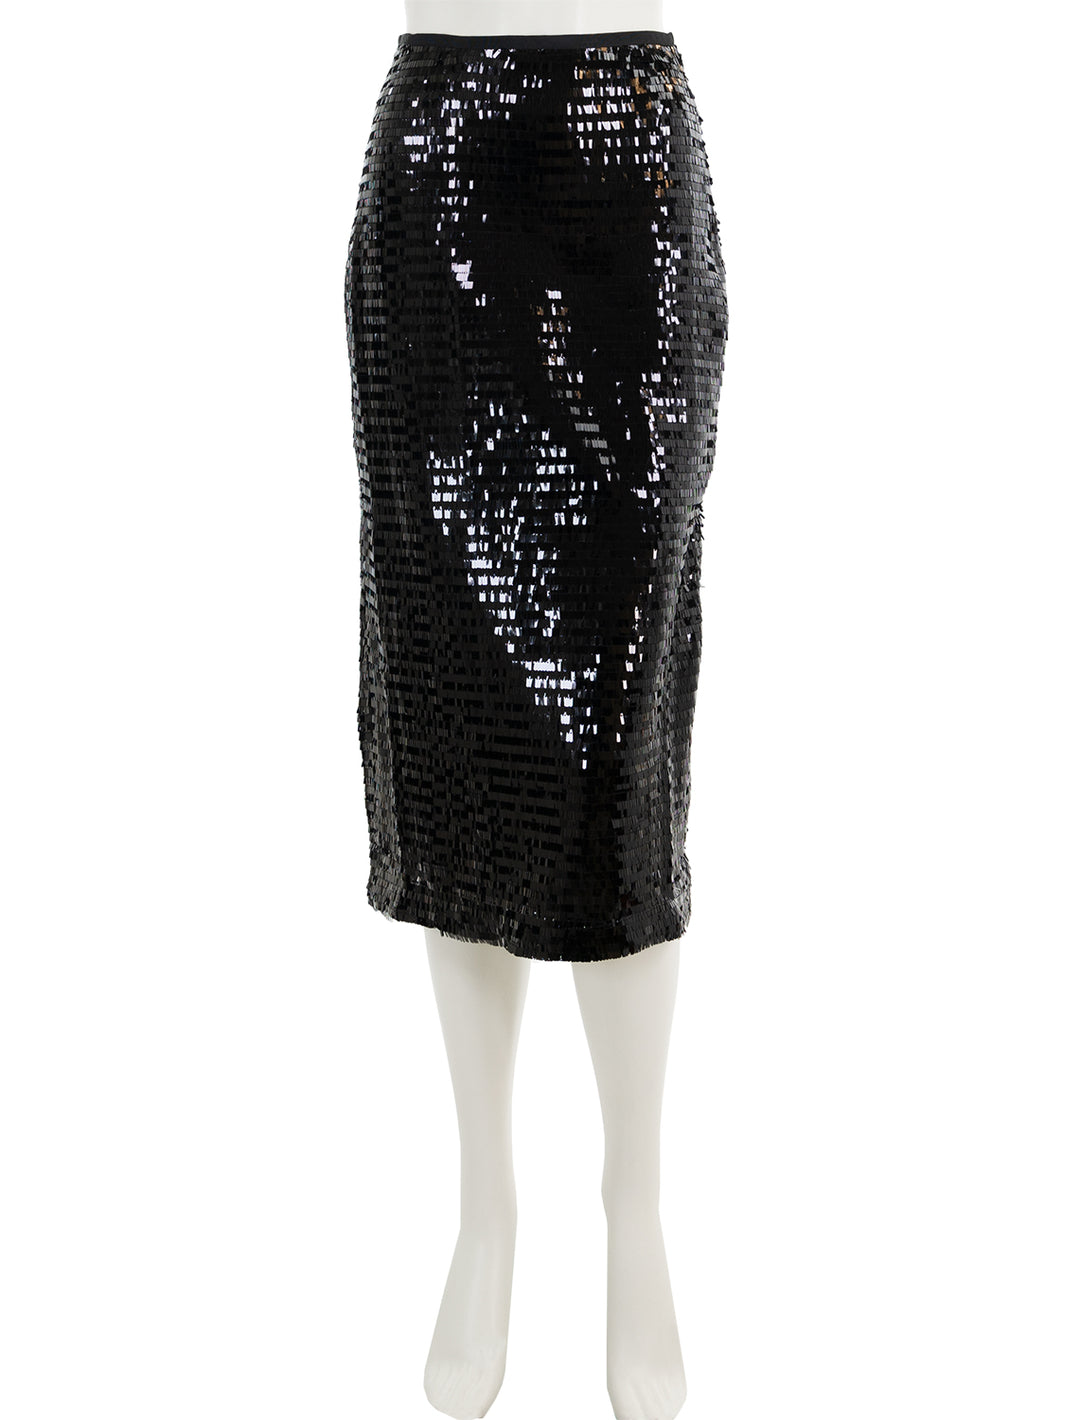 Front view of Steve Madden's dinah midi skirt in black sequins.